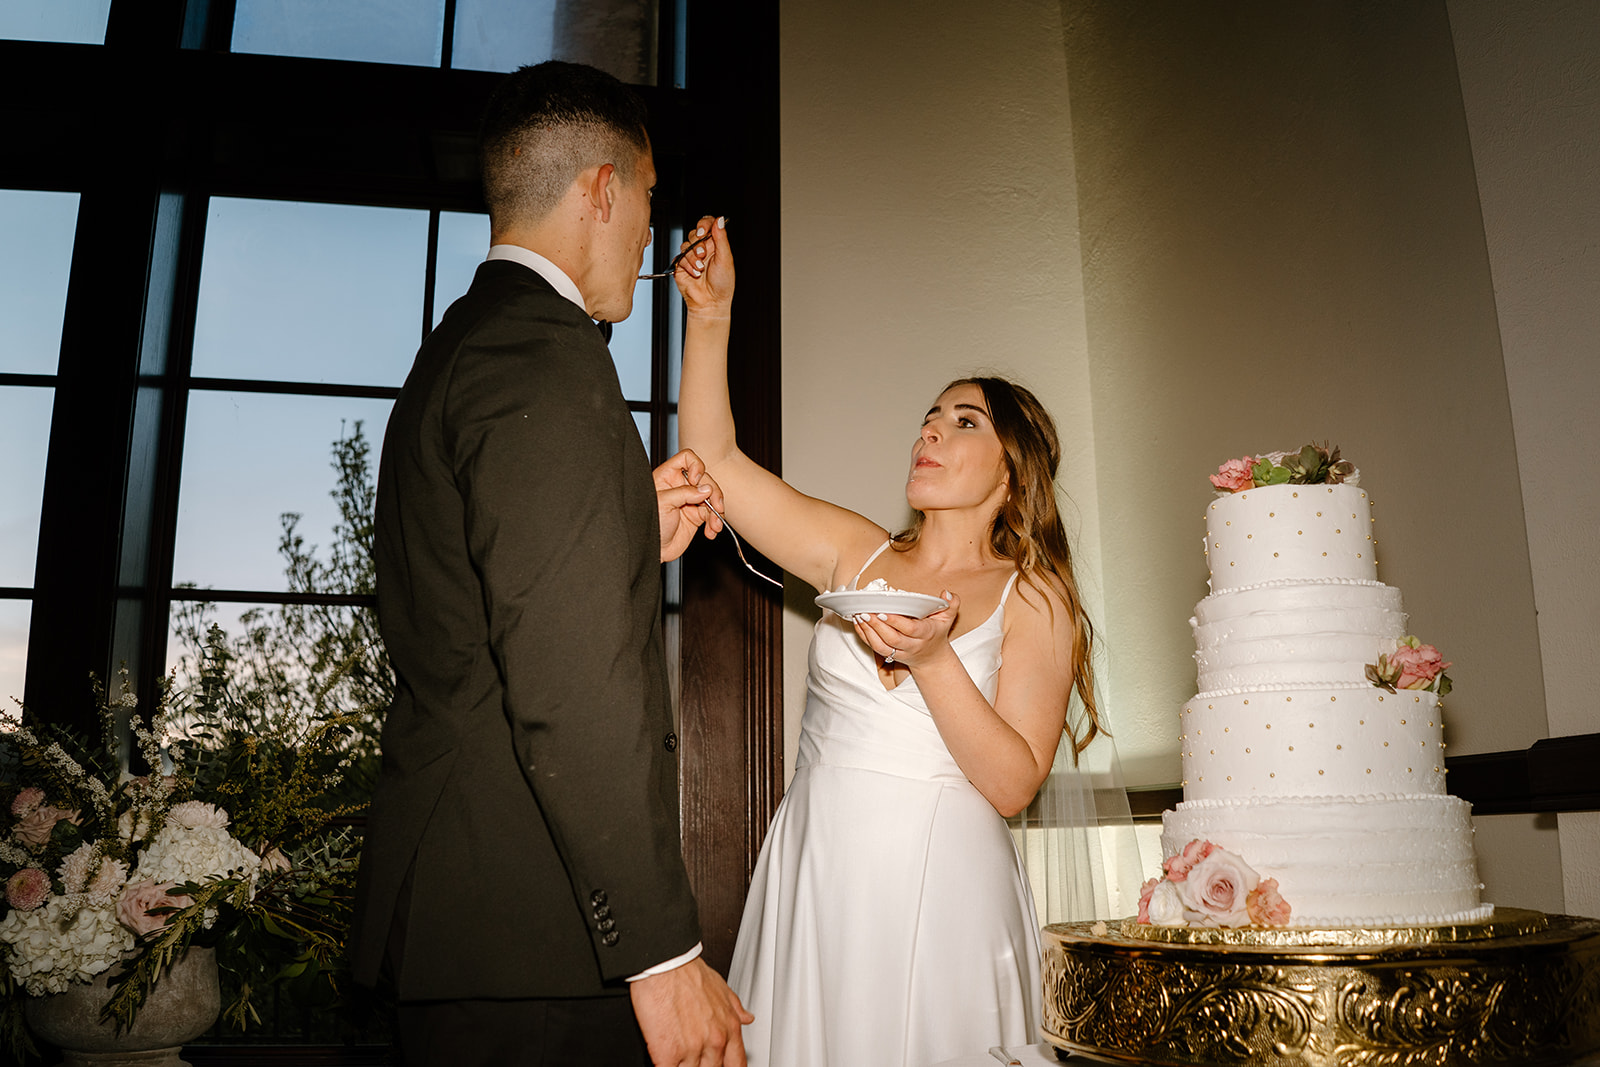 Sydney Jai Photography - Northern California wedding photographer, bride and groom cake cutting